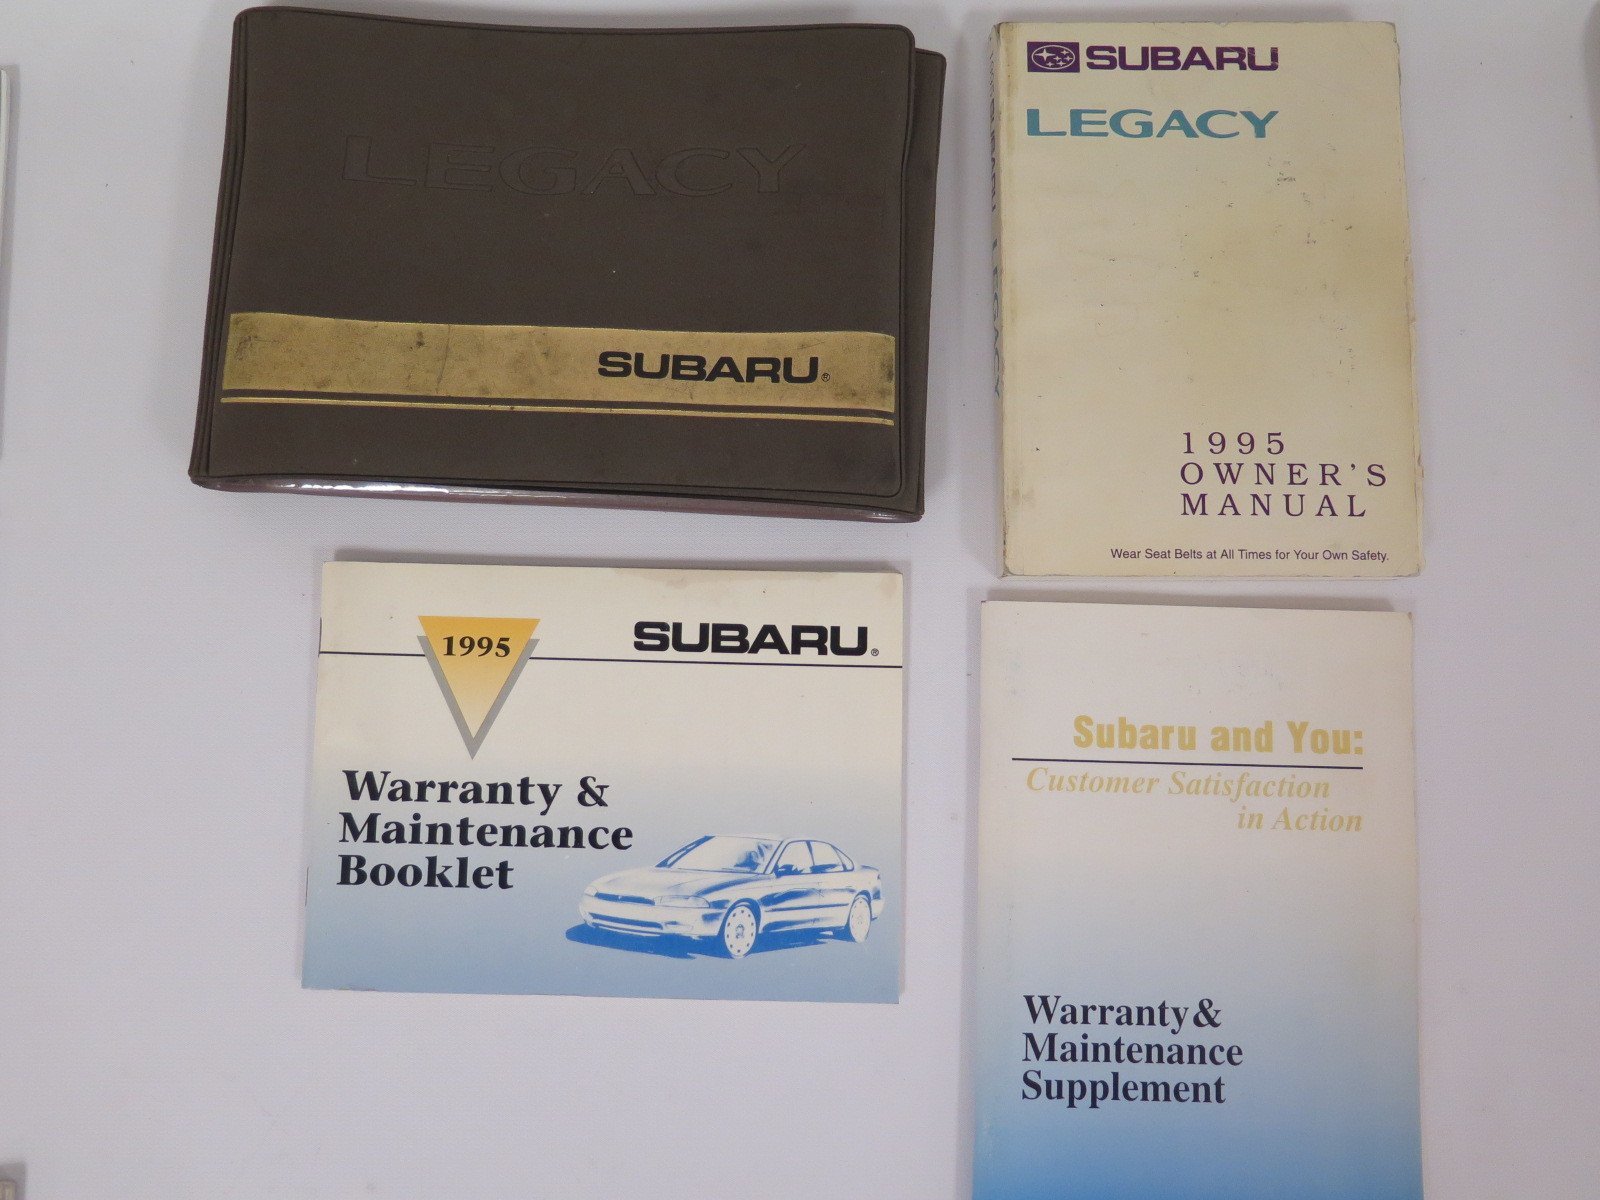 1995 Subaru Legacy Owners Manual [Paperback] Subaru - $28.43